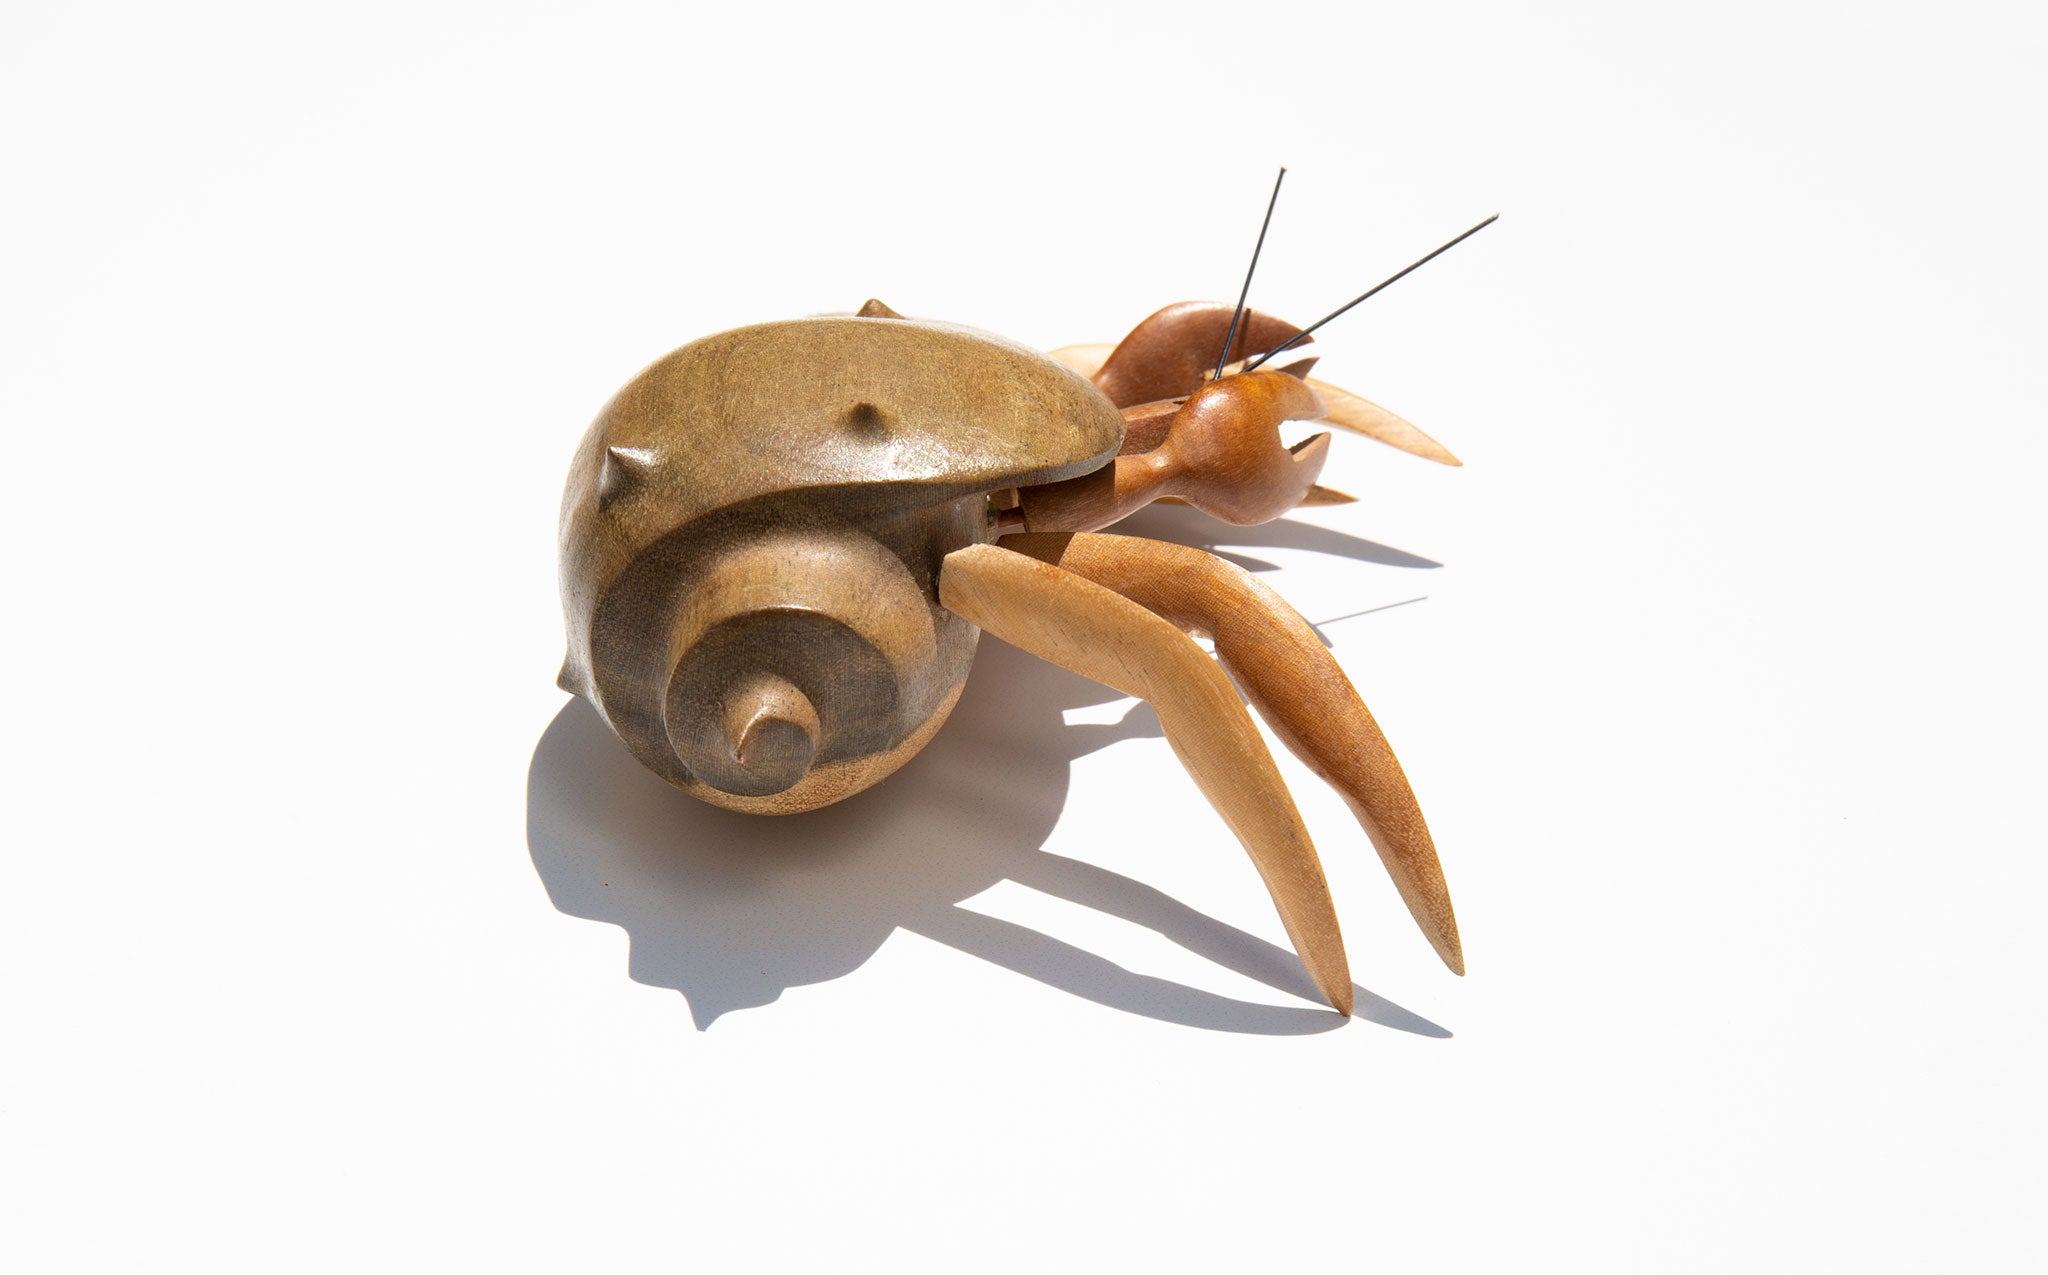 Wooden Crab